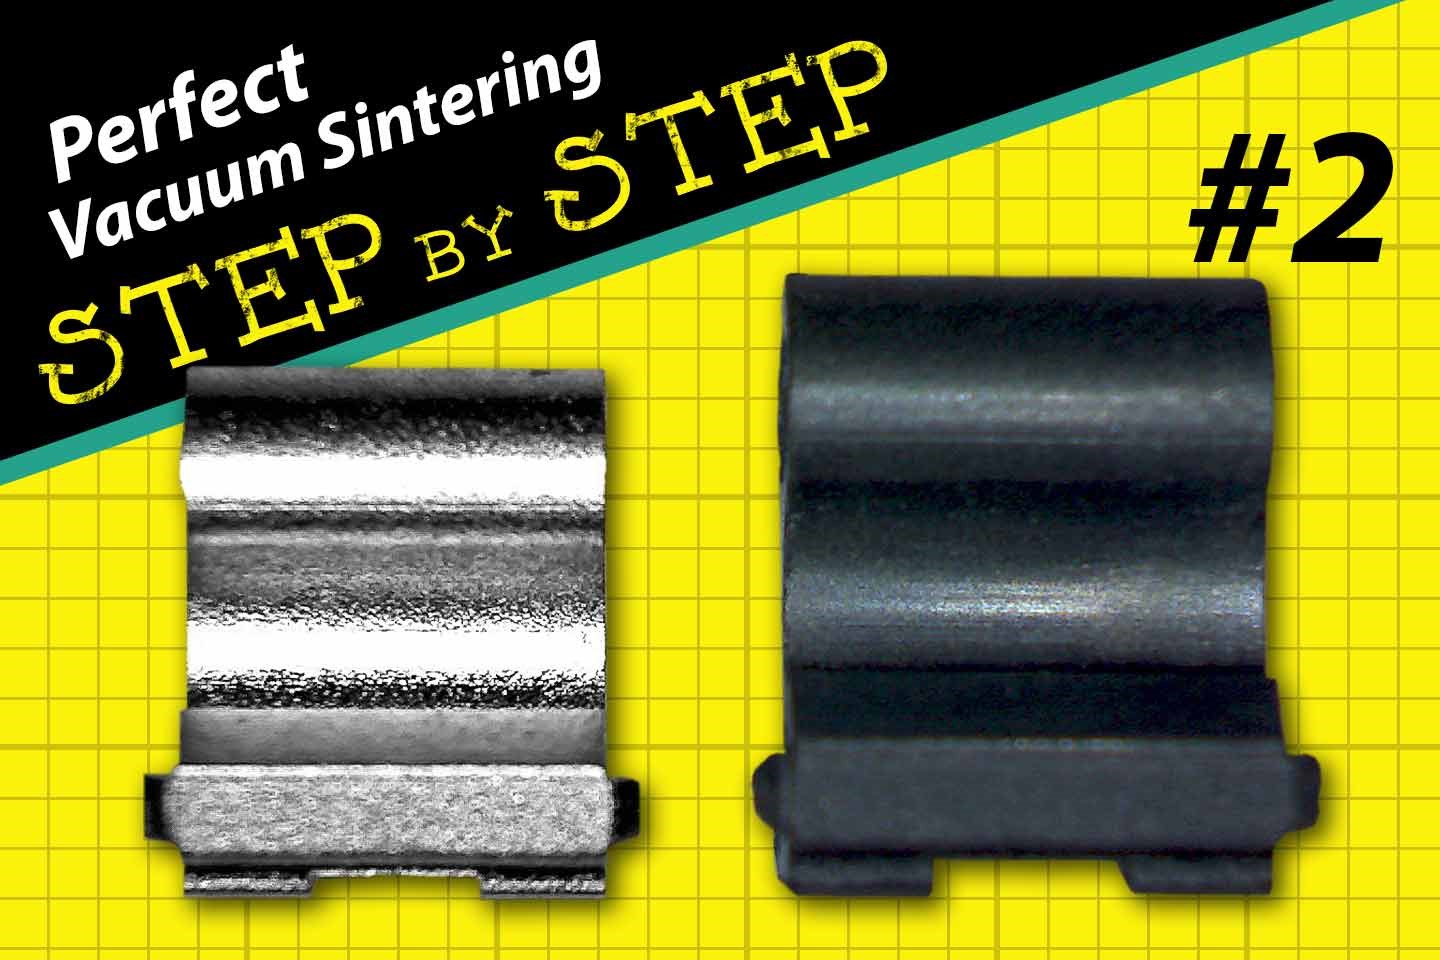 Perfect vacuum sintering step by step [2/4]